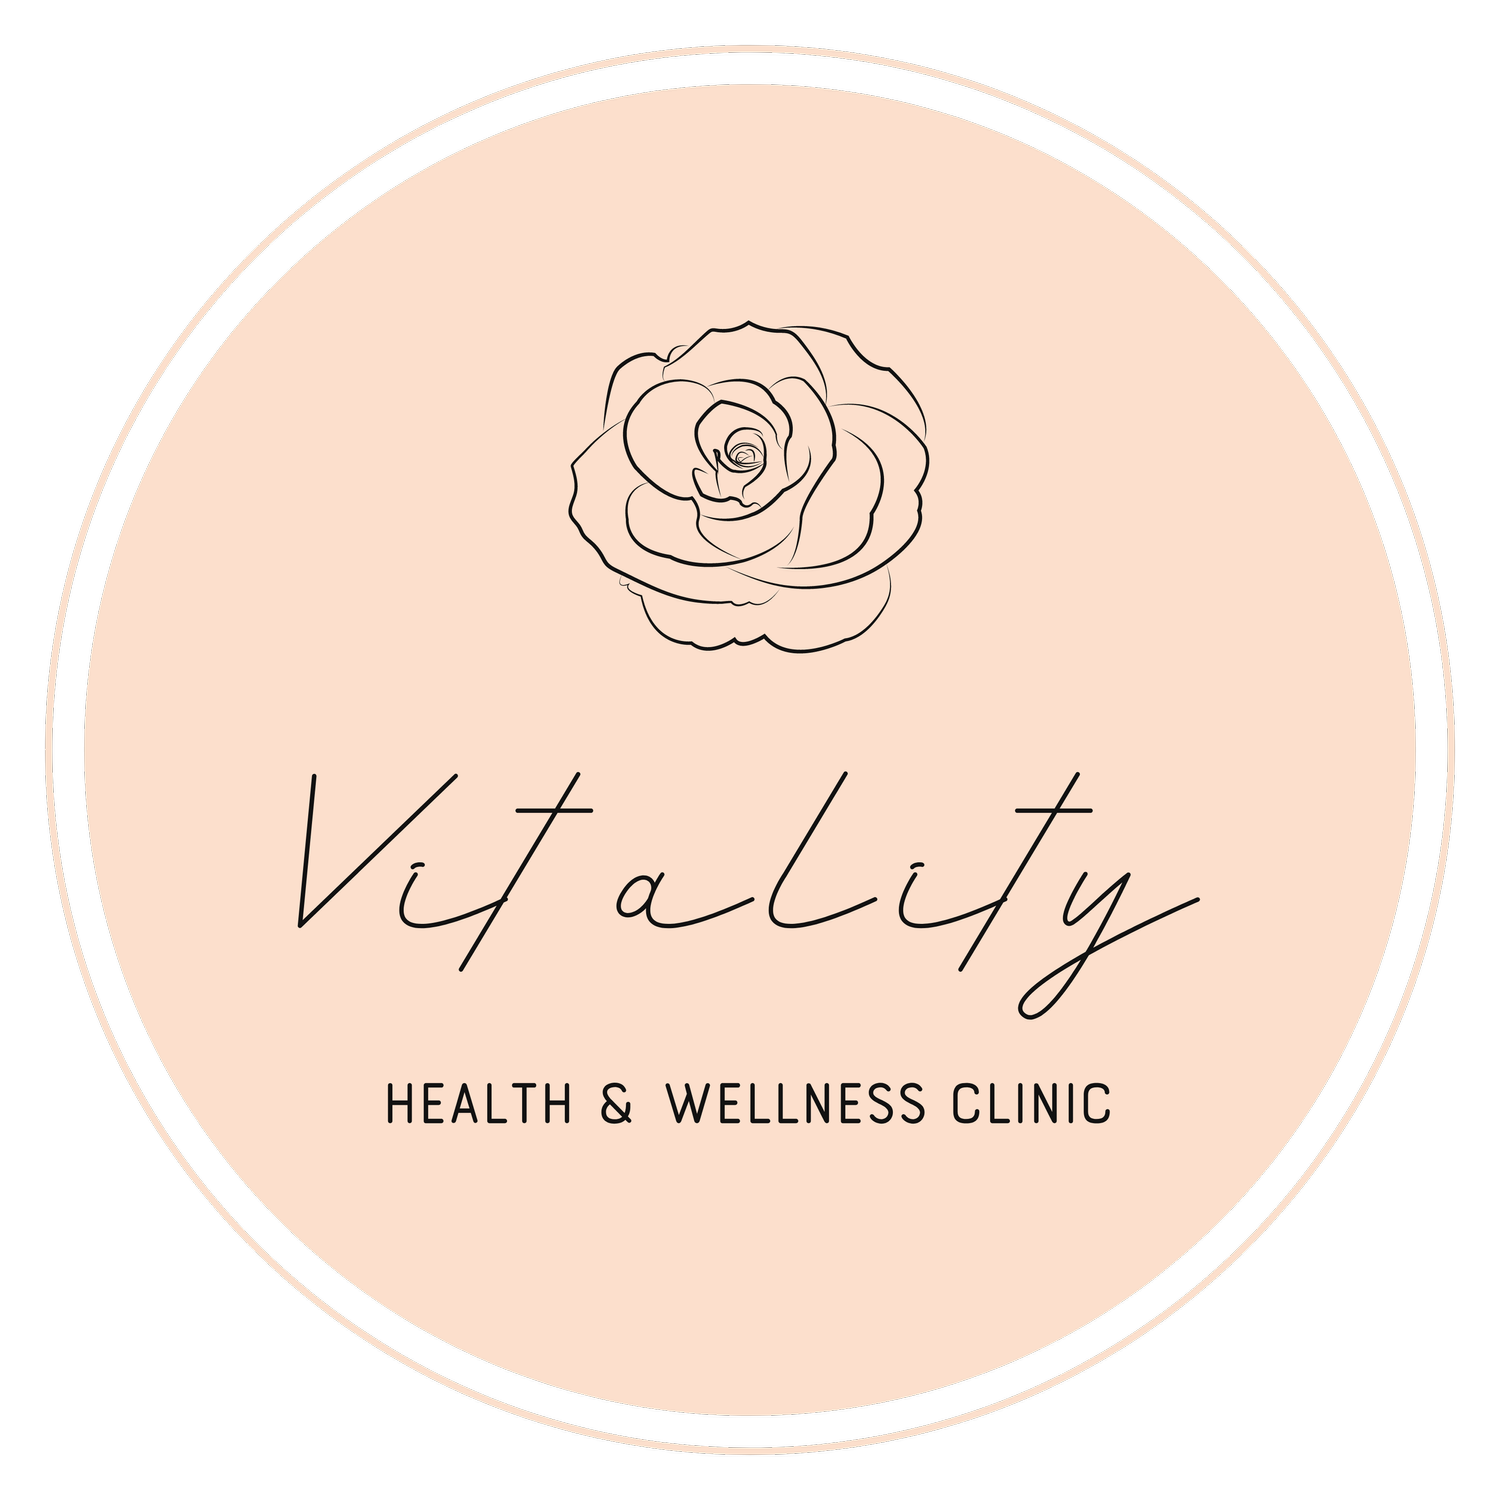 Vitality HW Clinic